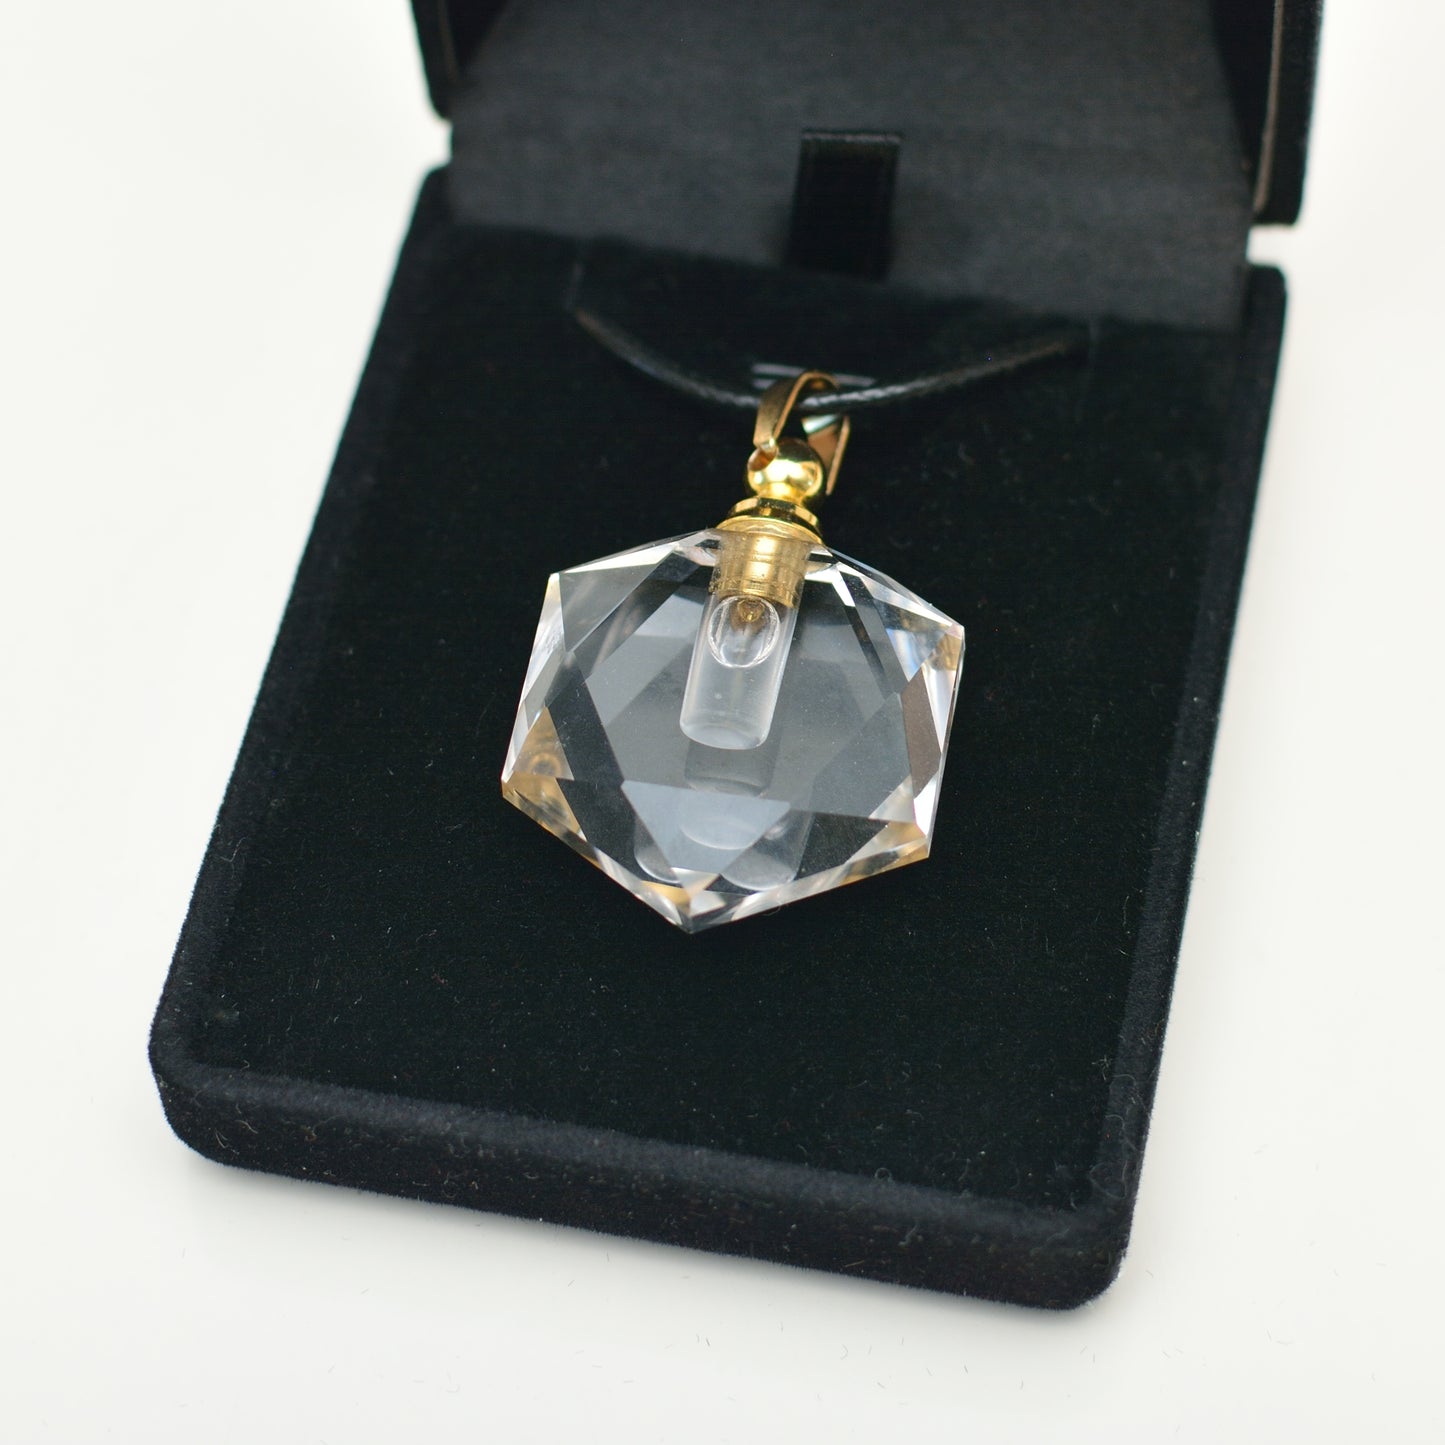 Attract Love and Abundance with the SUNLIGHT RIPPLES Liquid Plasma Crystal Amulet